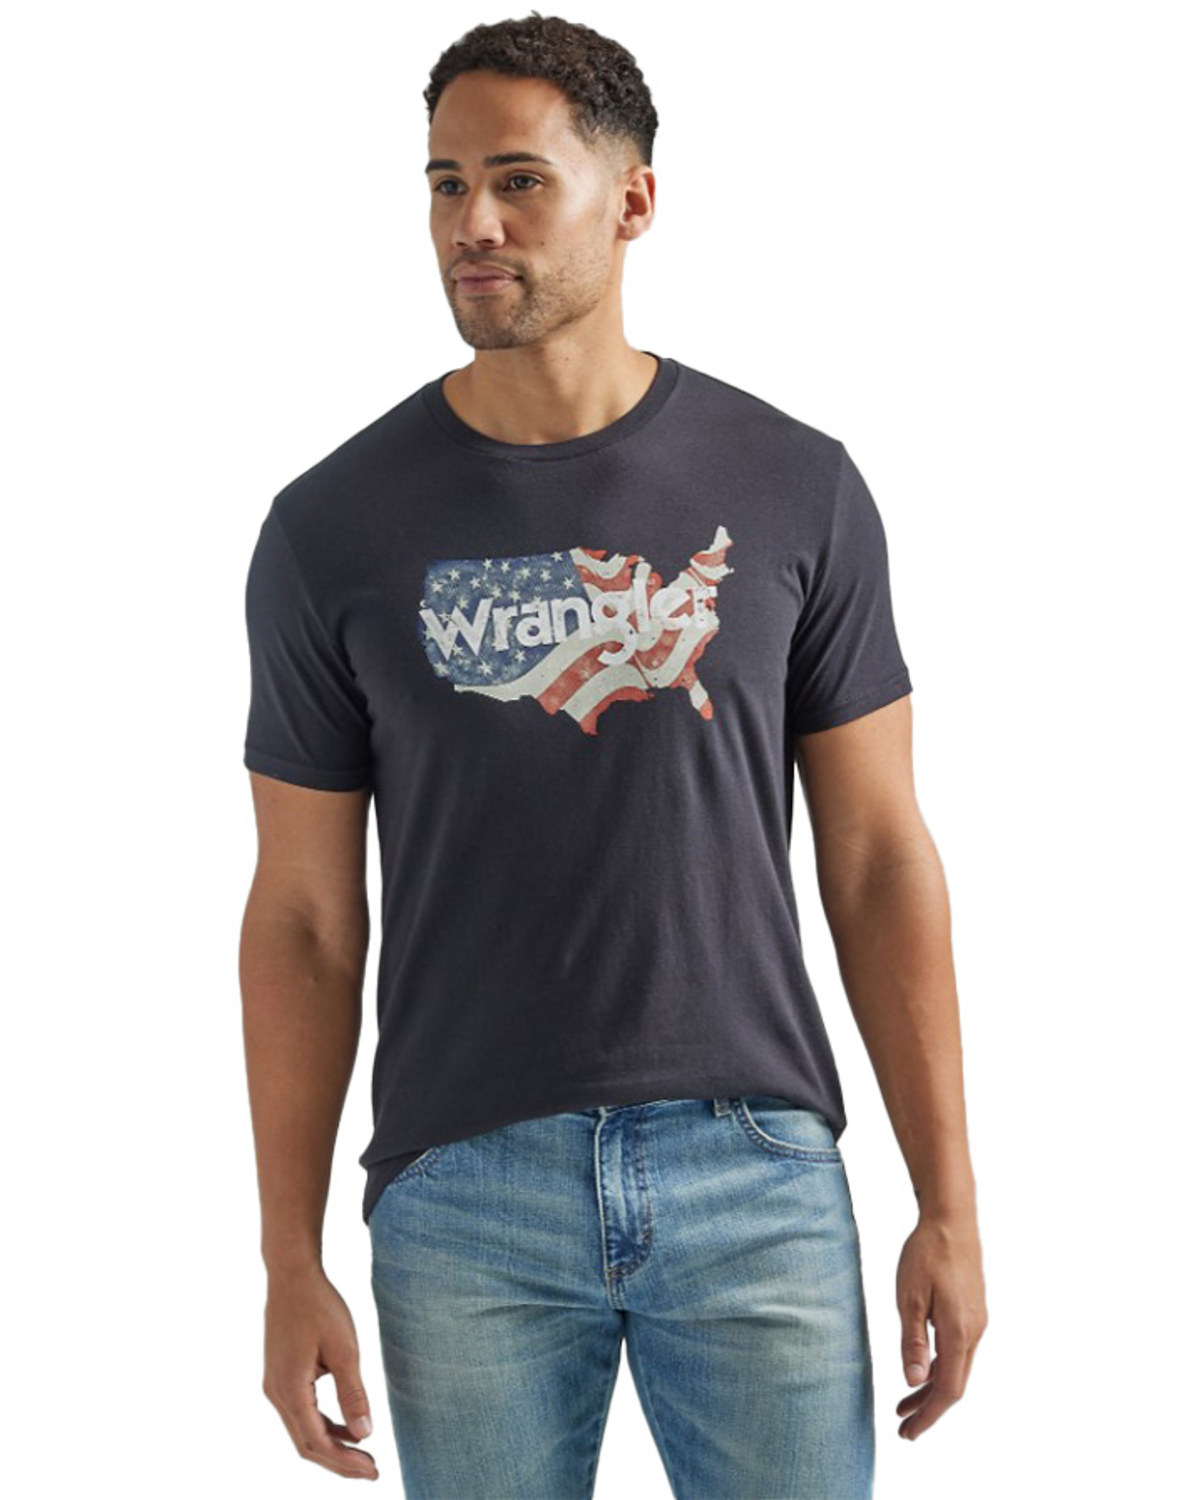 Wrangler Men's Americana USA Short Sleeve Graphic T-Shirt